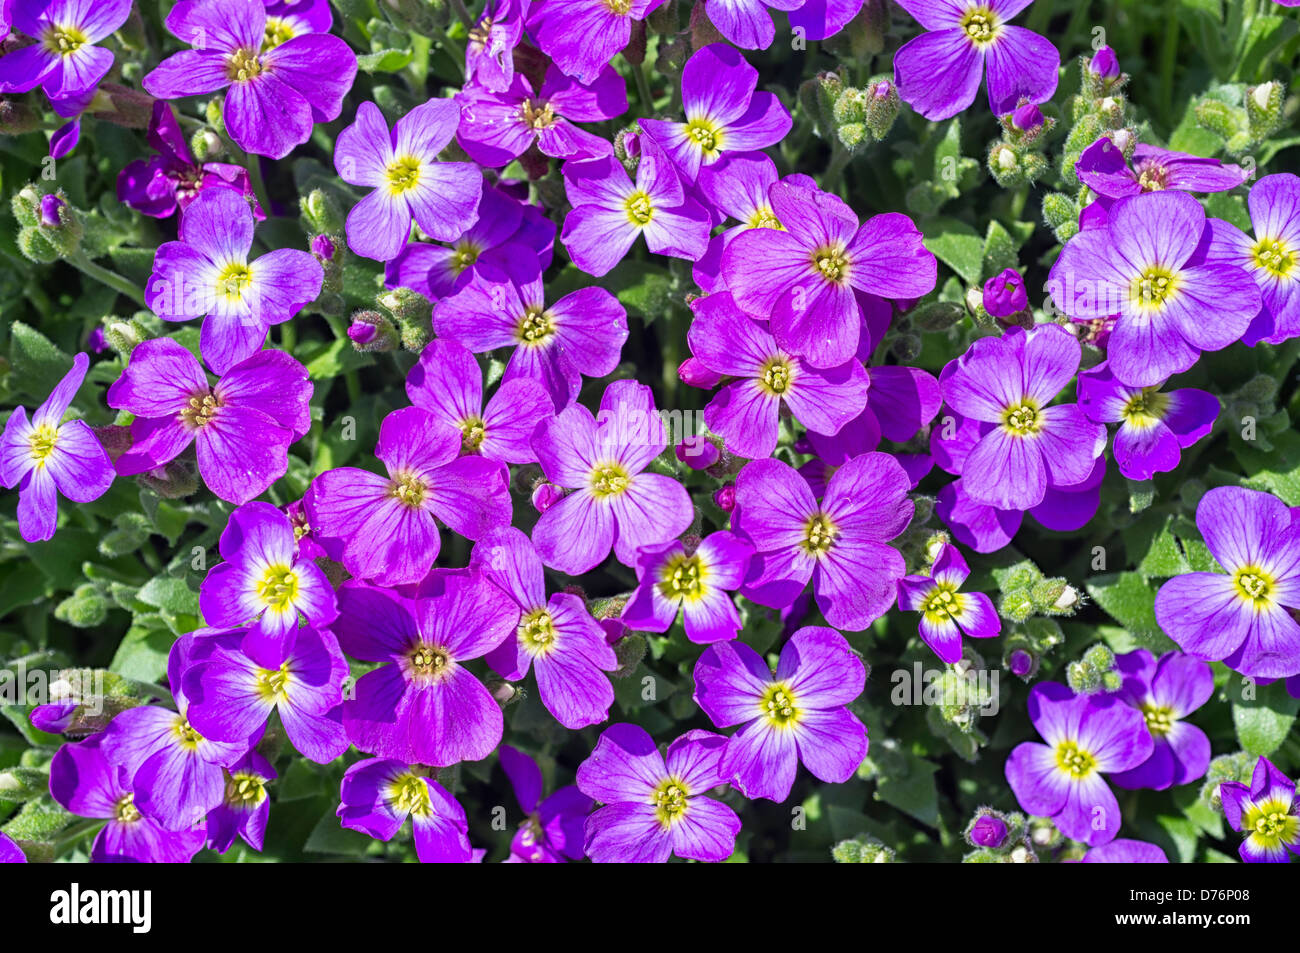 Aubrieta Aubrieta Flowers High Resolution Stock Photography and Images -  Alamy